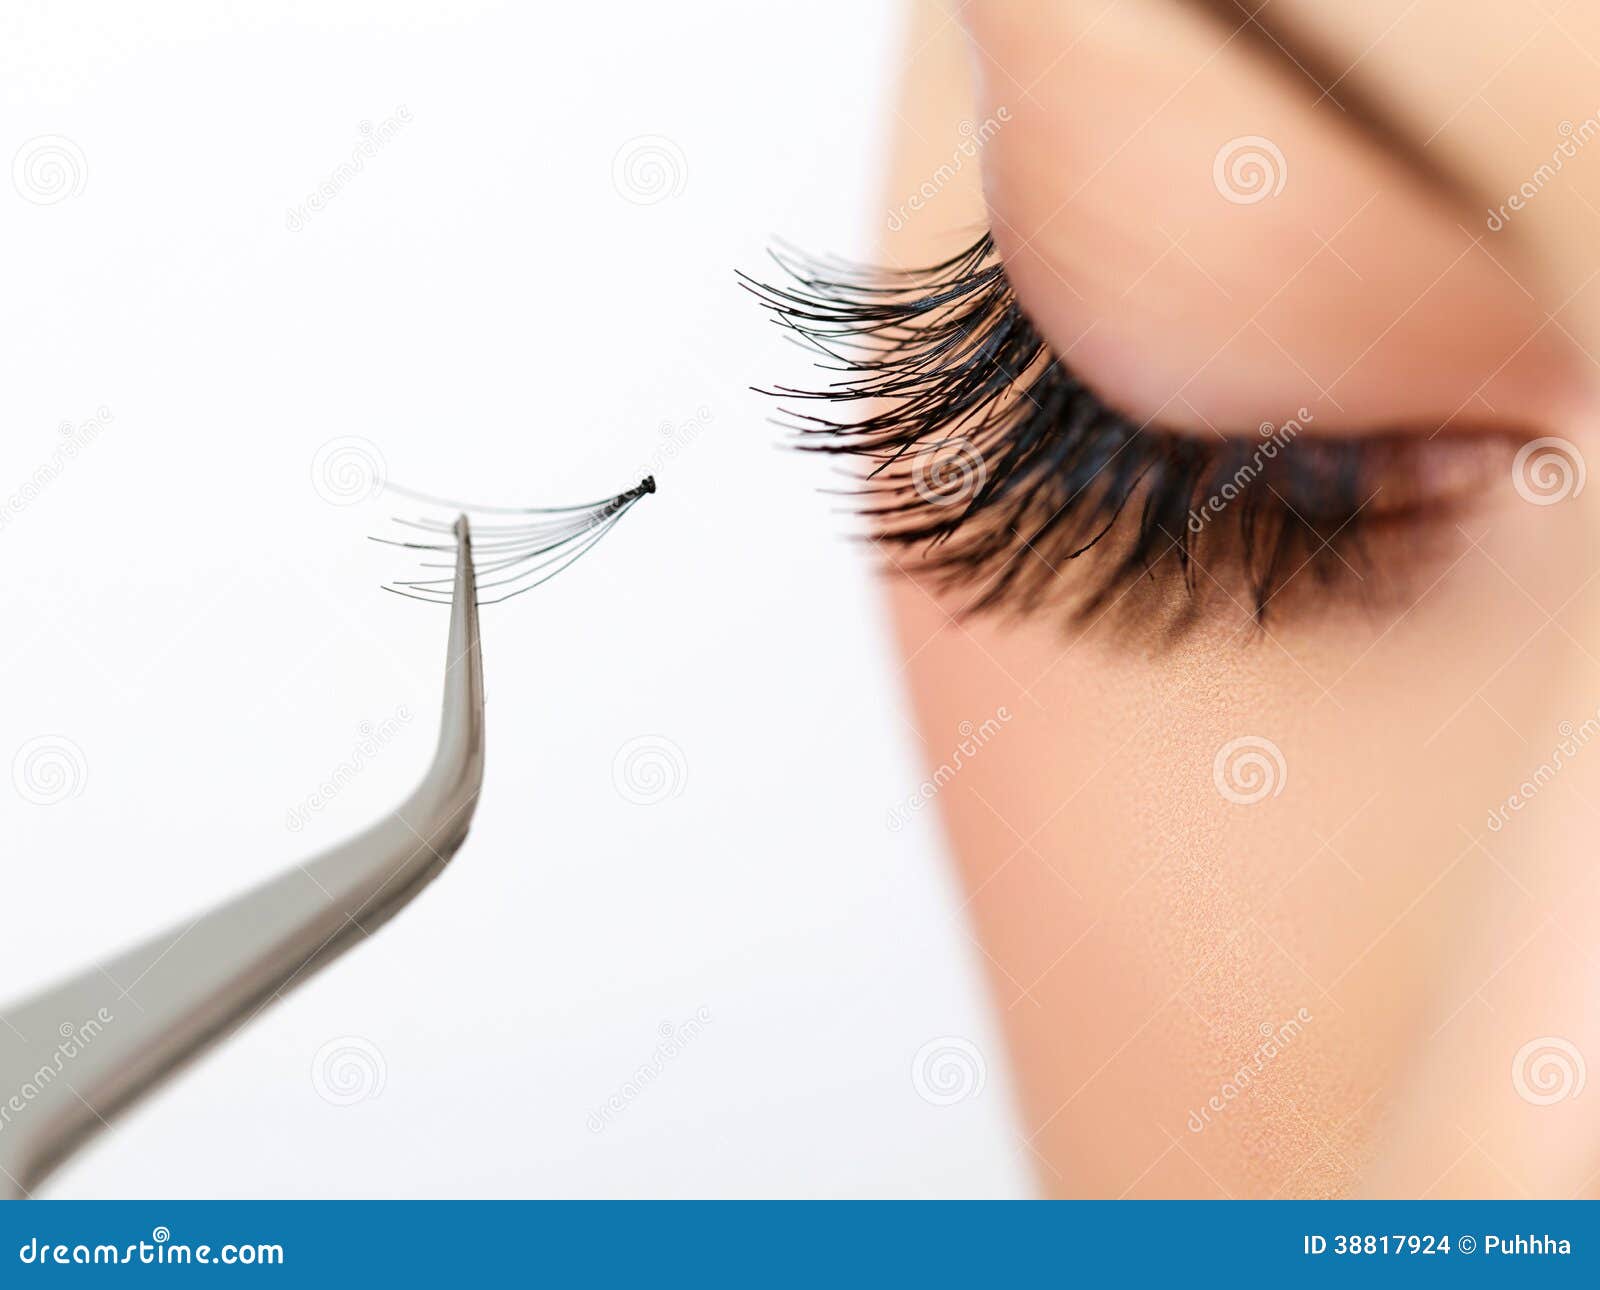 woman eye with long eyelashes. eyelash extension